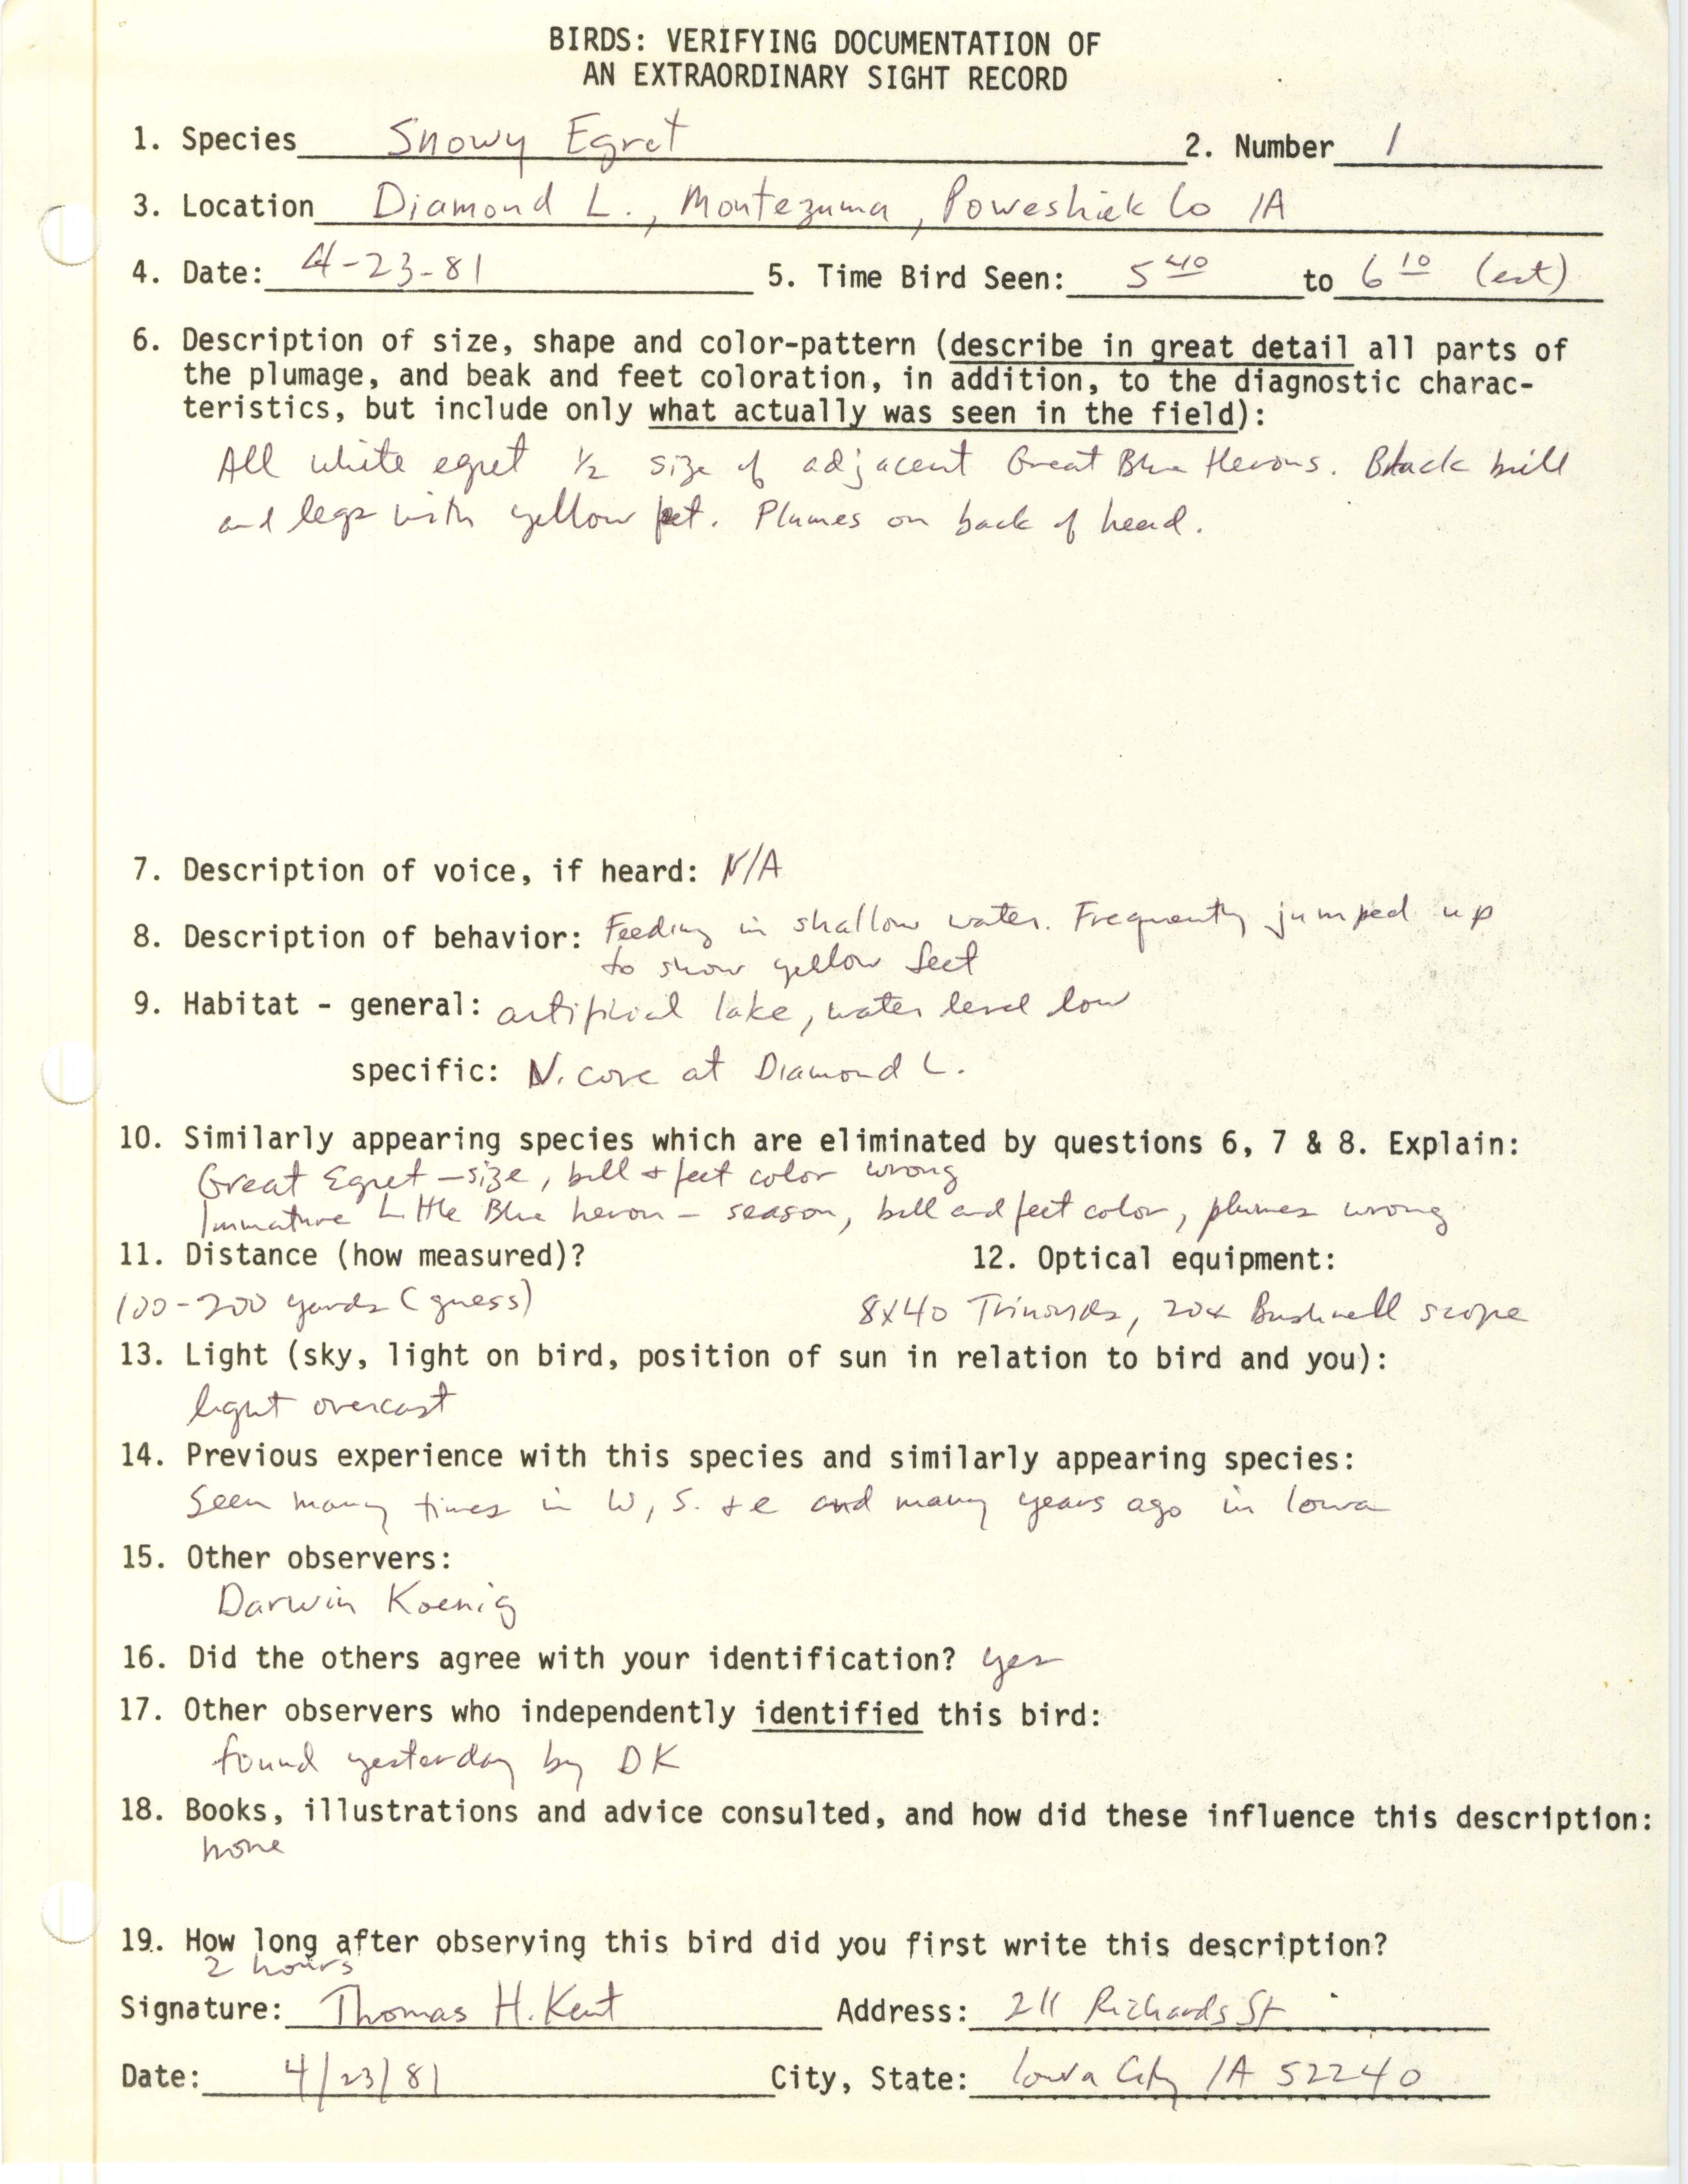 Birds: verifying documentation of an extraordinary sight record Thomas H. Kent, April 23 1981